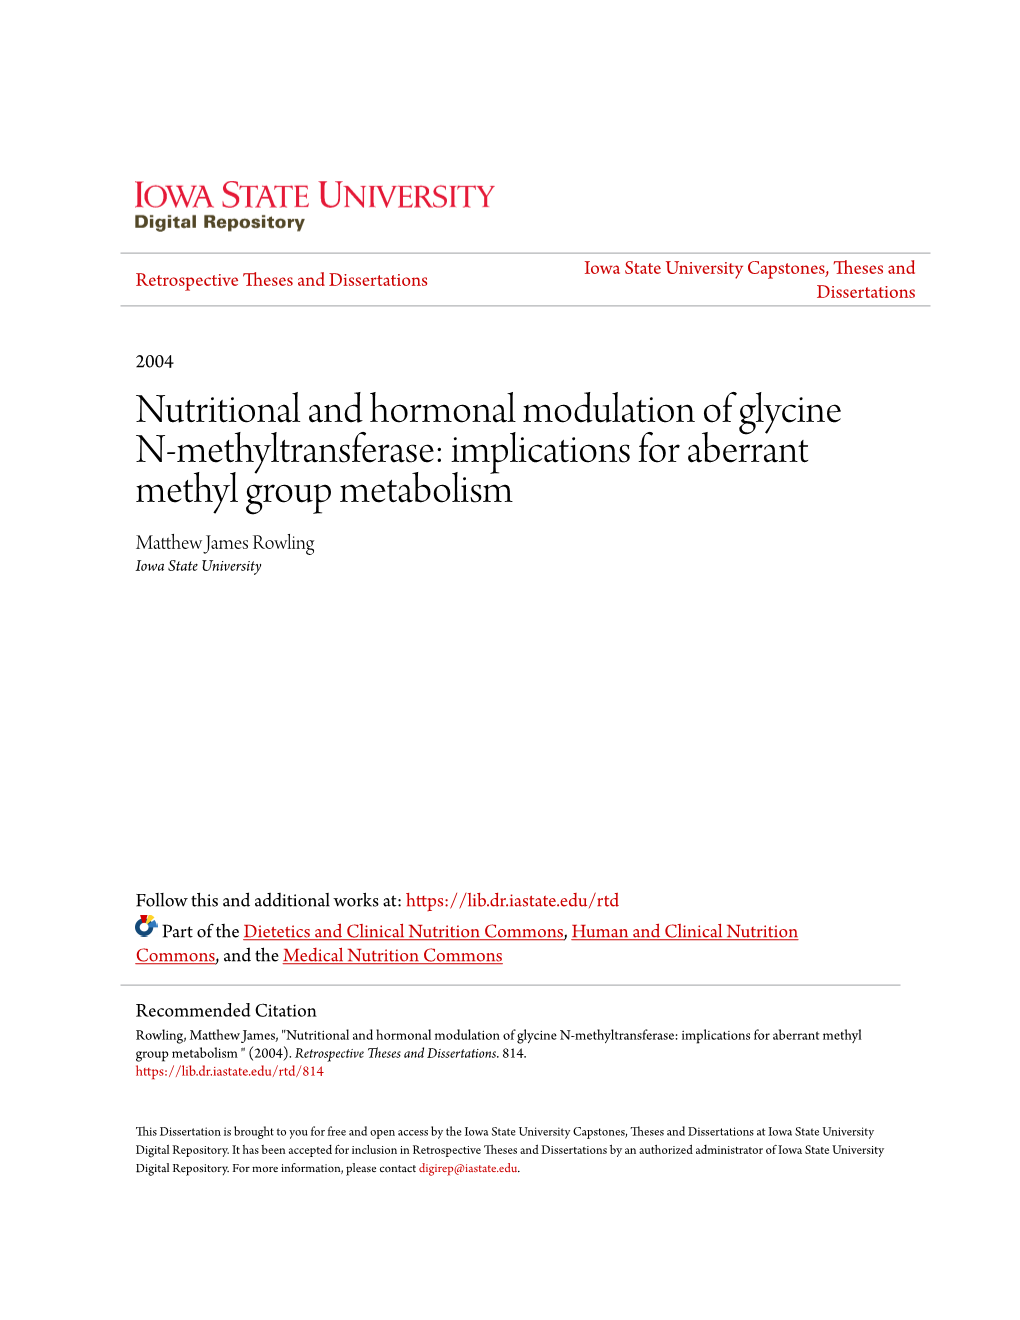 Nutritional and Hormonal Modulation of Glycine N-Methyltransferase: Implications for Aberrant Methyl Group Metabolism Matthew Aj Mes Rowling Iowa State University